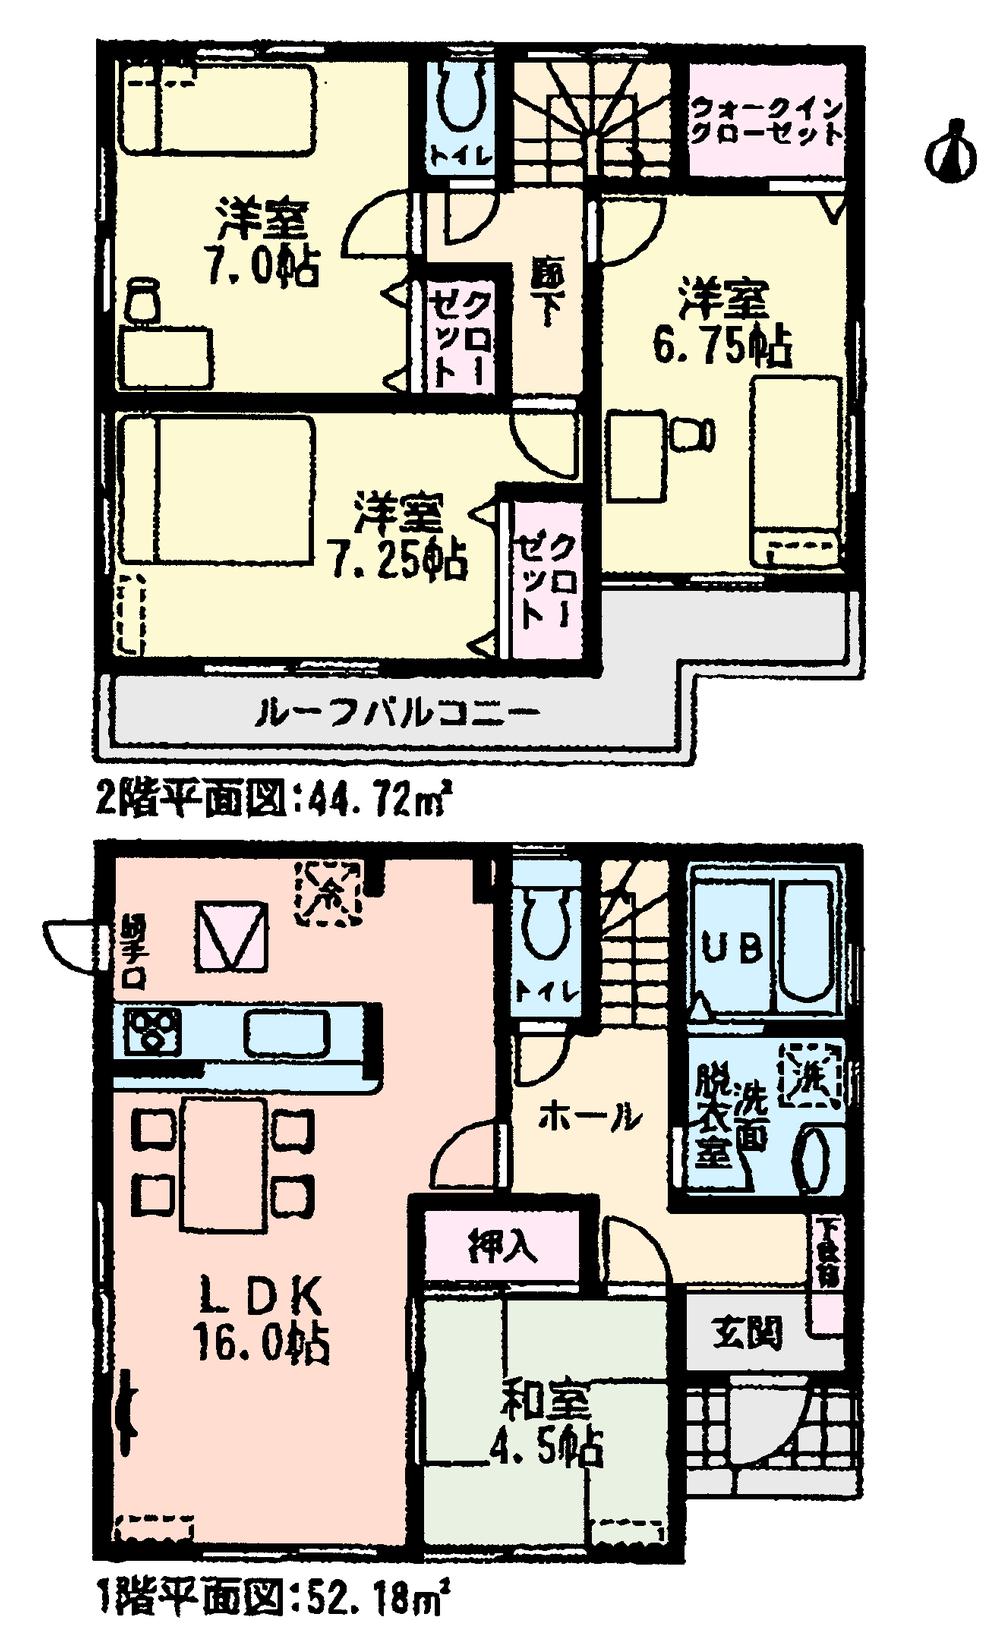 Floor plan. (11 Building), Price 33,800,000 yen, 4LDK, Land area 200.4 sq m , Building area 99.79 sq m